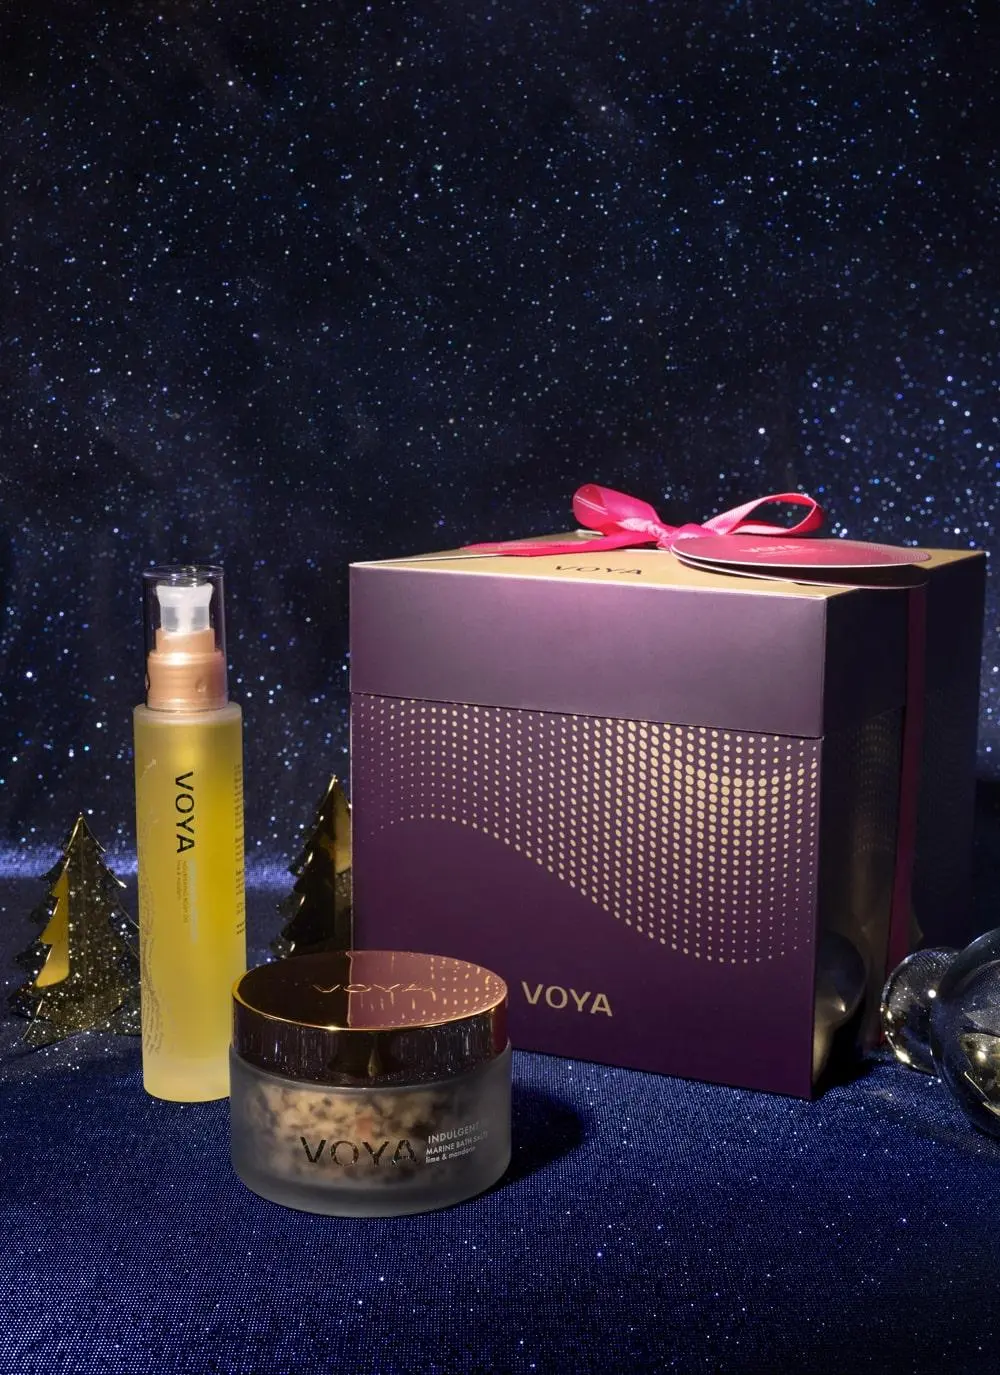 VOYA Lunar Bathe Christmas Gift Set styled shot with festive purple background